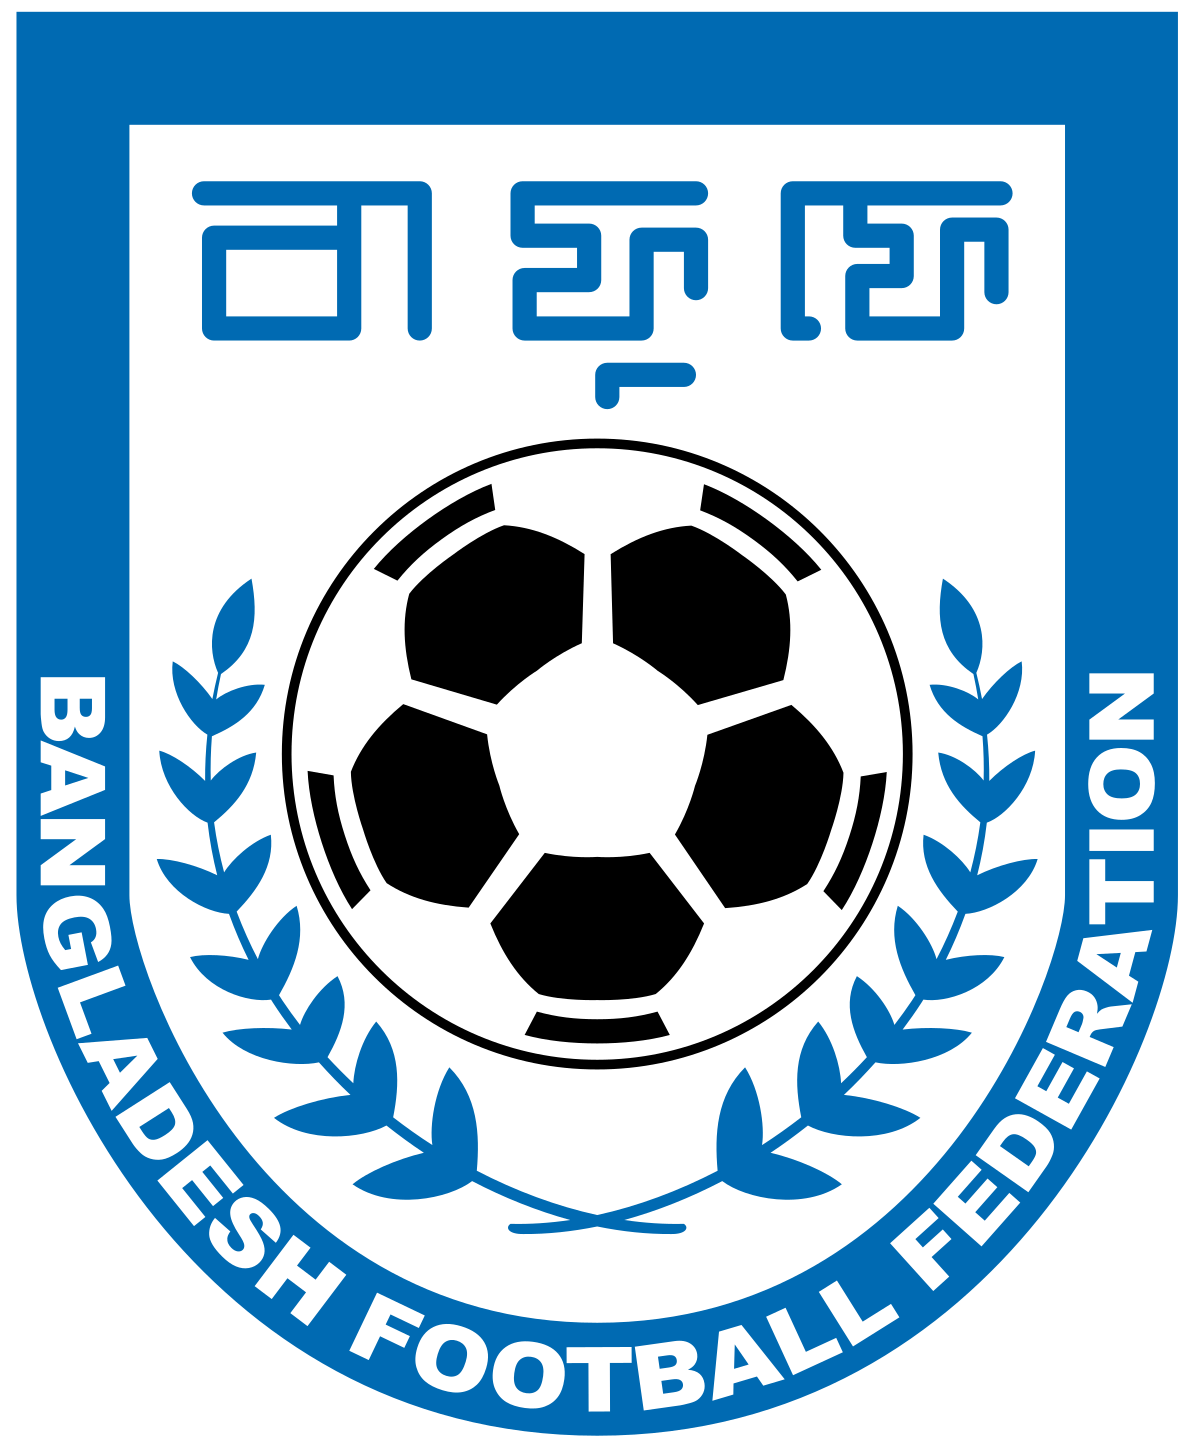 Football's Logo - Bangladesh national football team